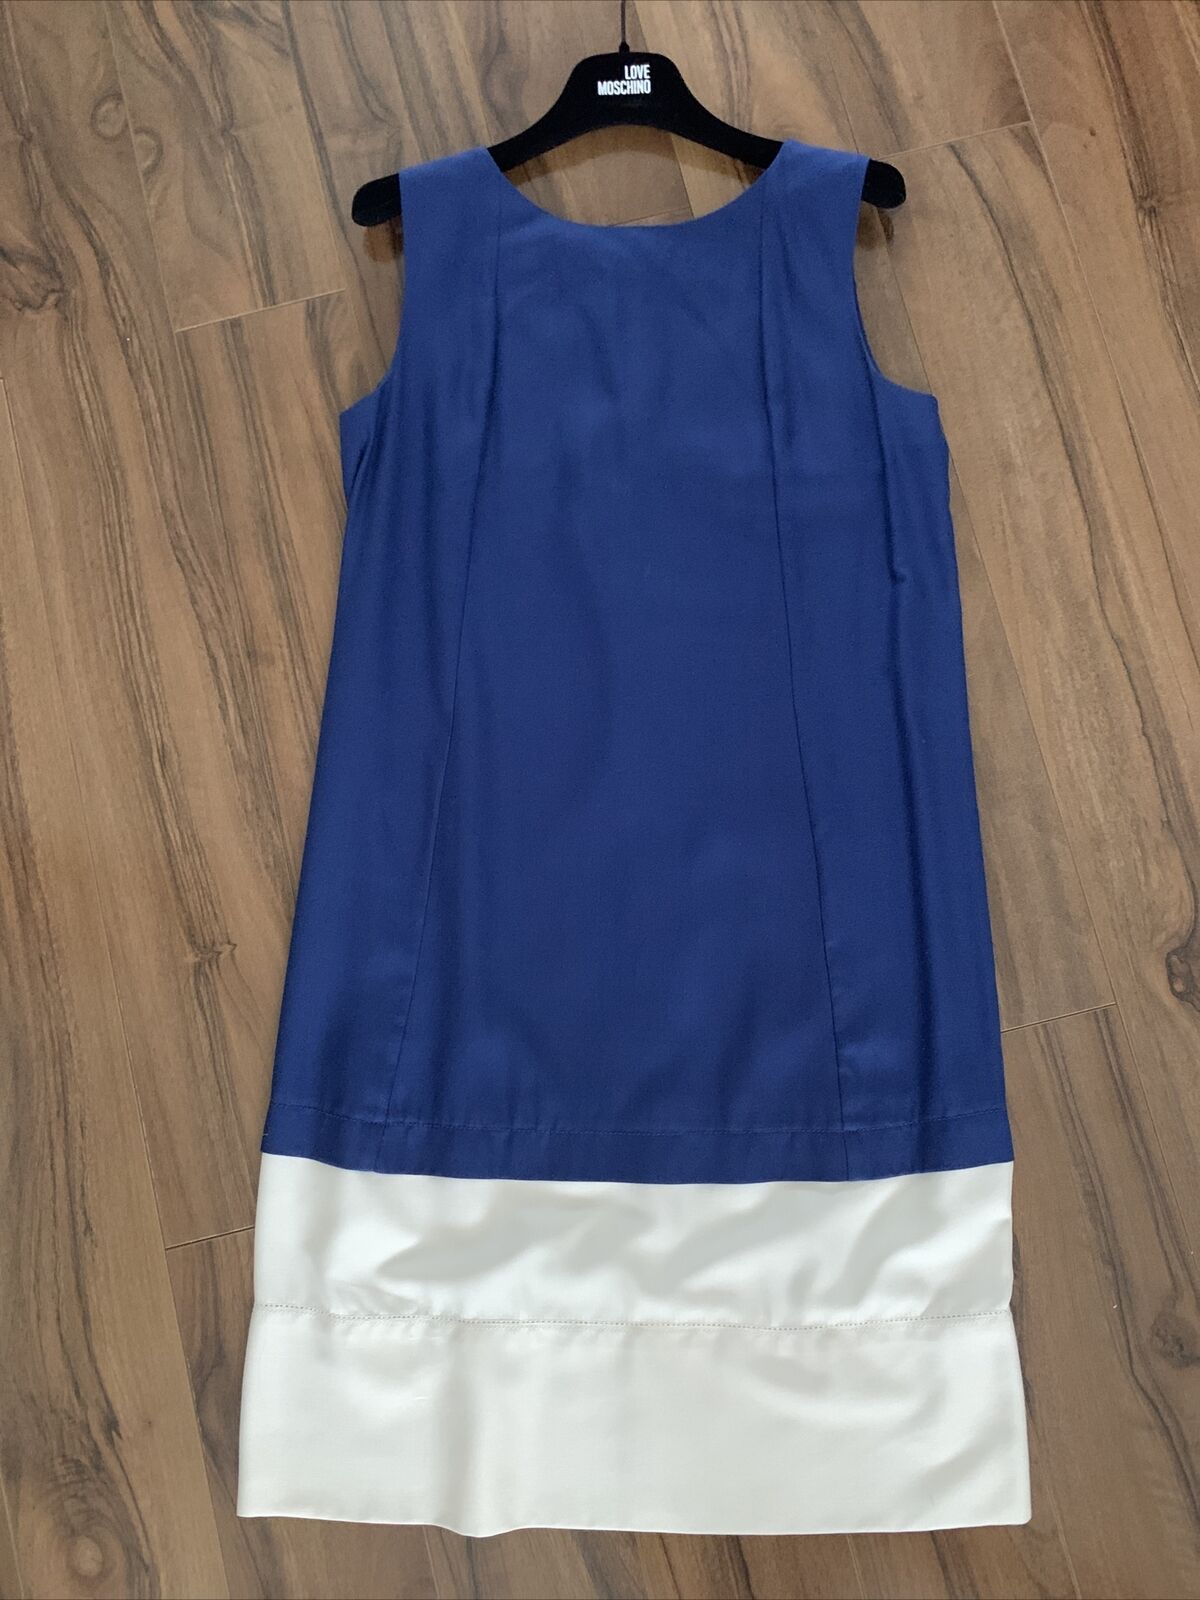 BNWT Balenciaga  Silk Dress Size 36